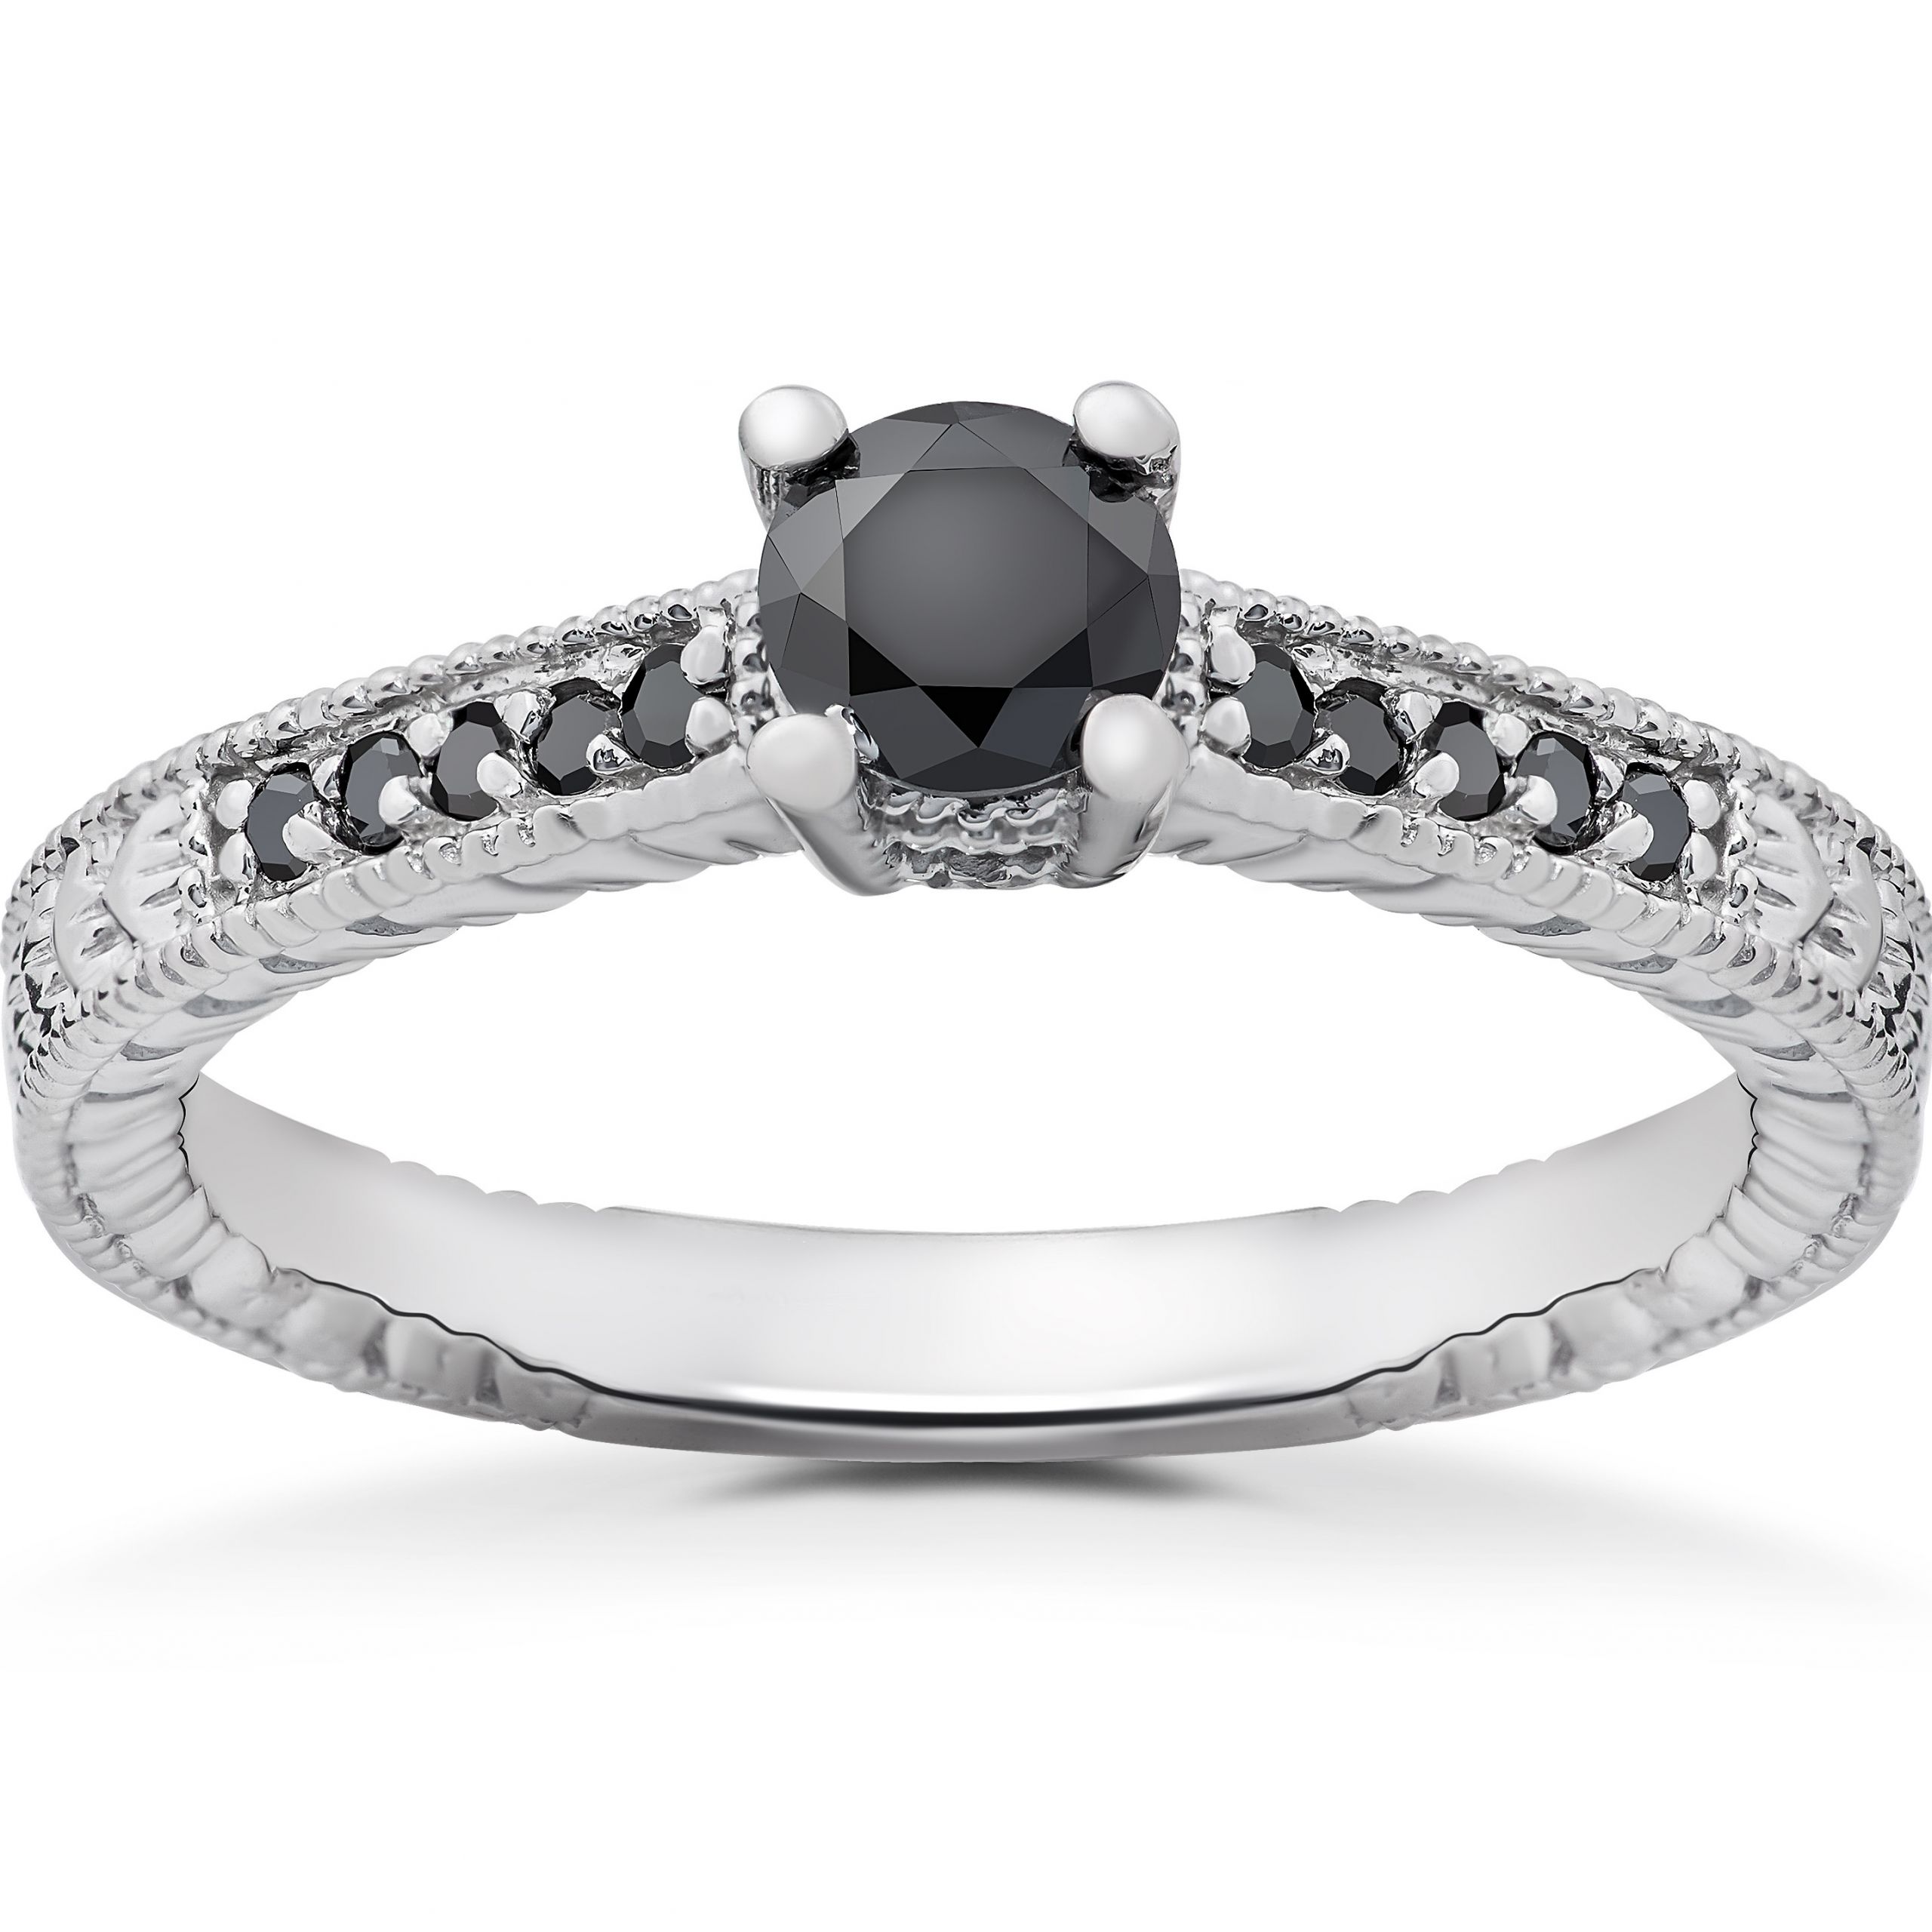 Wedding Rings With Black Diamonds
 1 2 ct Black Diamond Vintage Engagement Ring 14k White